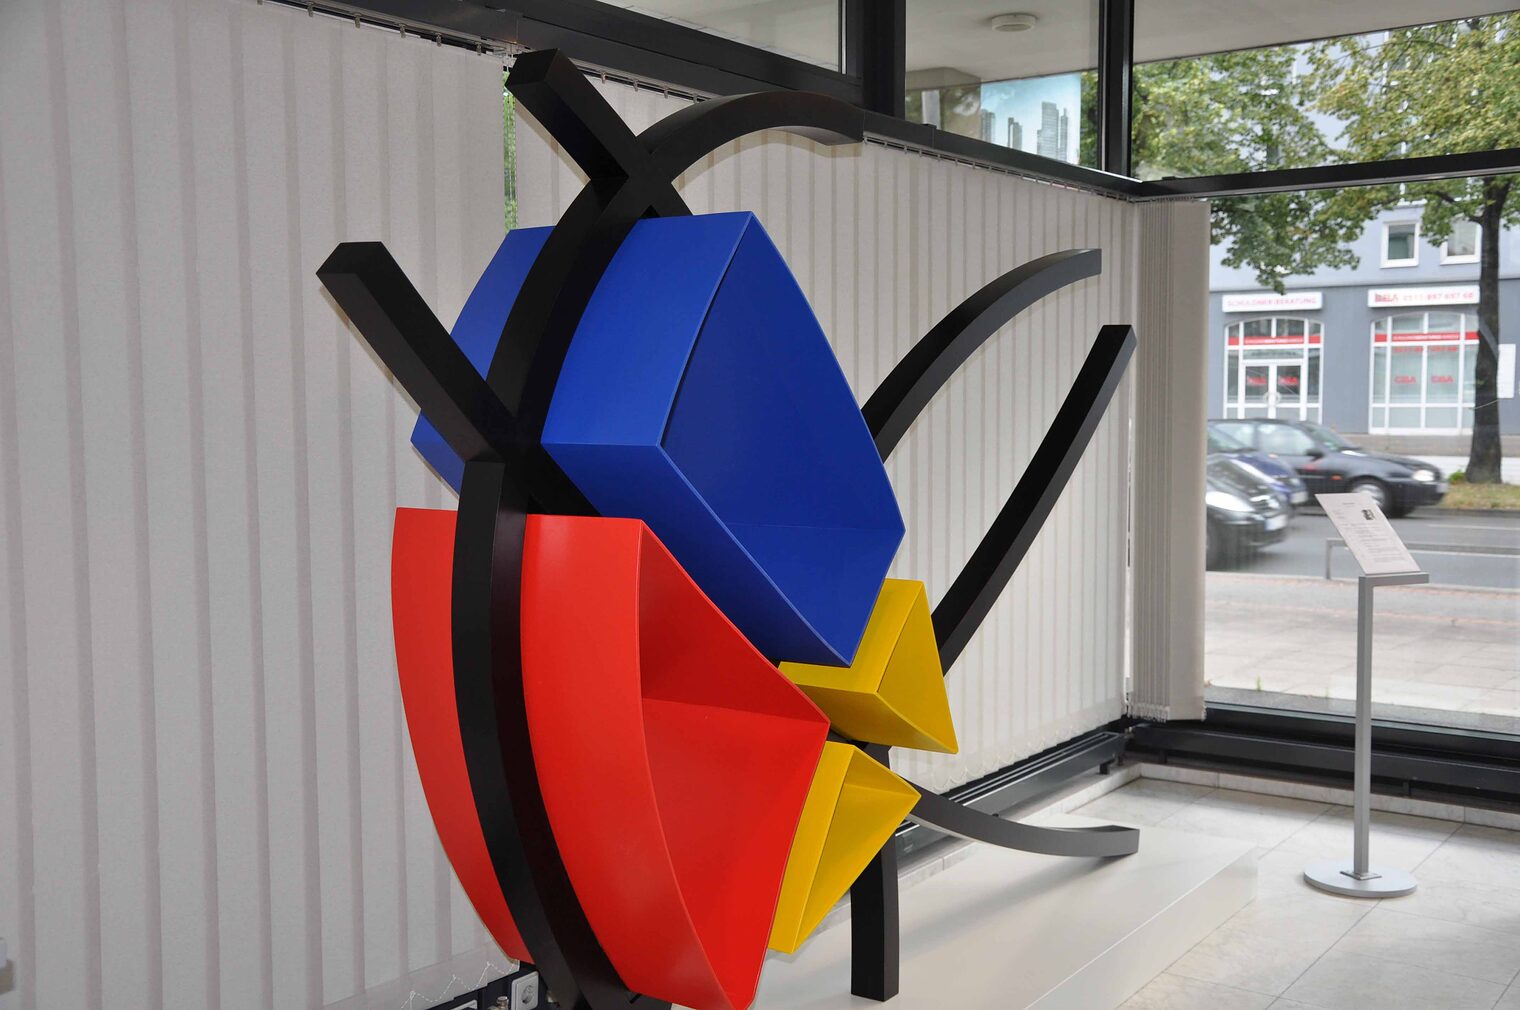 Regalskulptur: Mondrian läßt grüßen